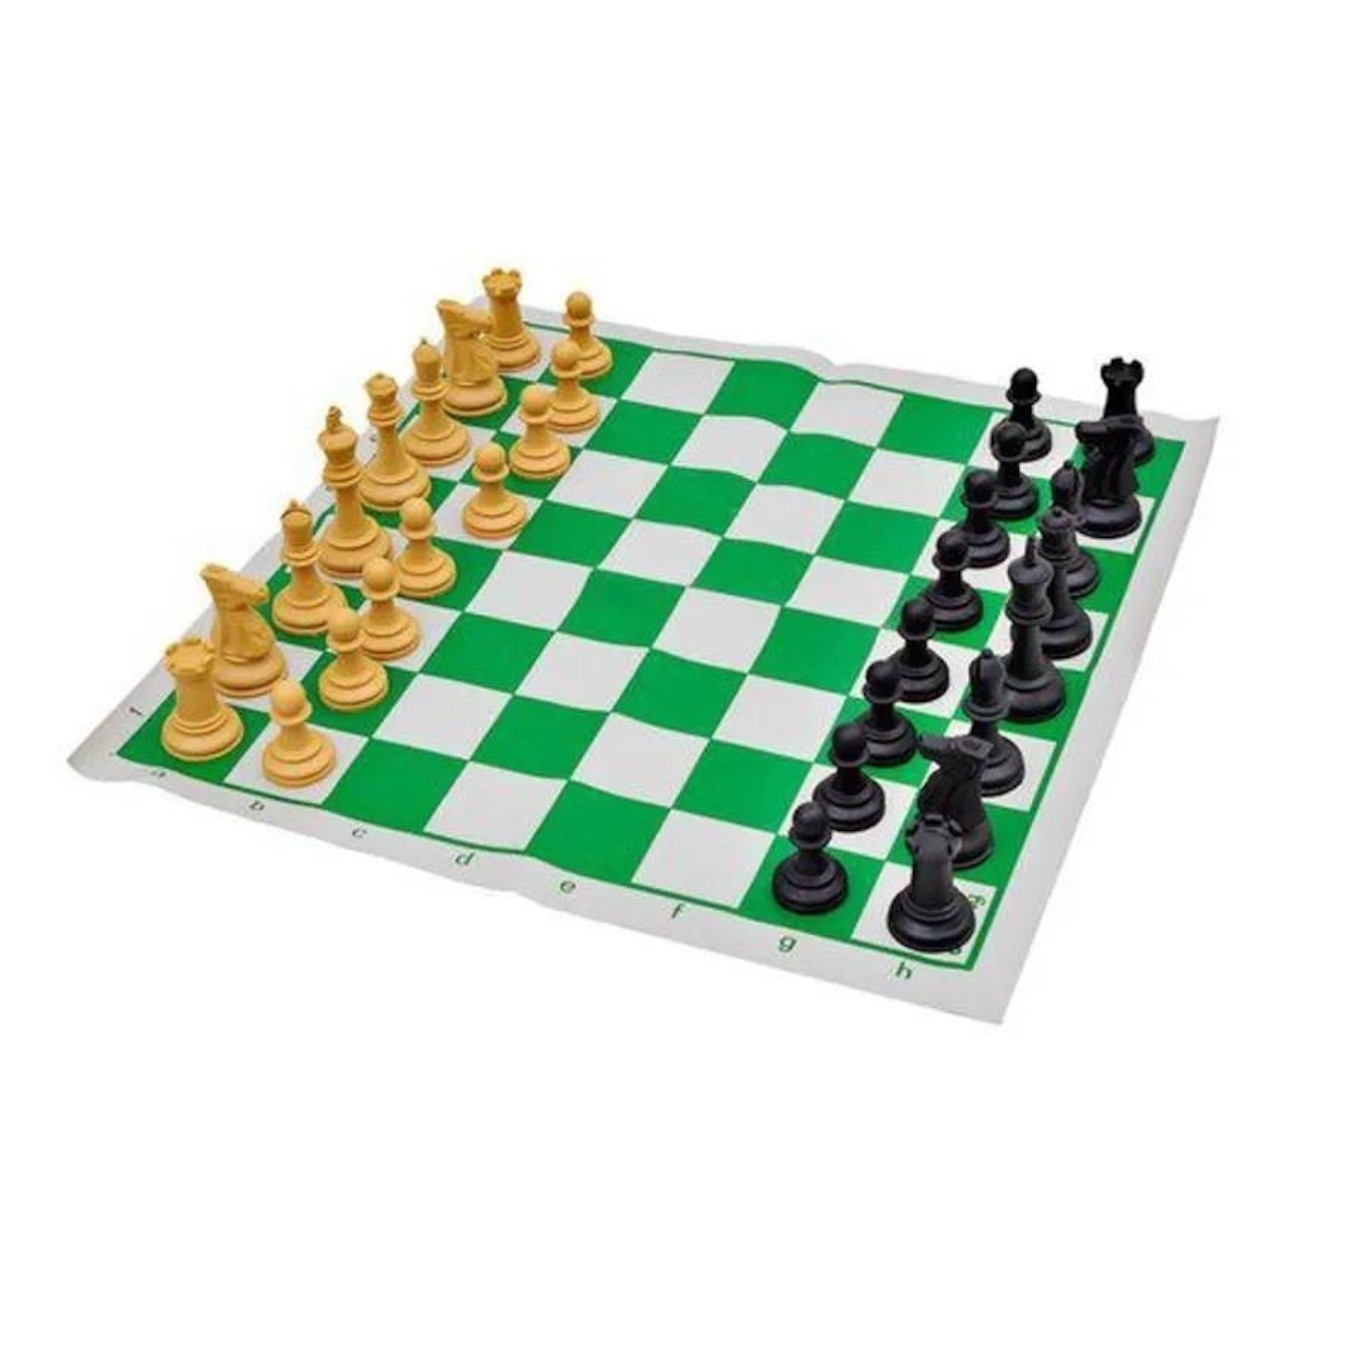 Esporte da mente”, xadrez estreia nos Jogos Escolares do Recife